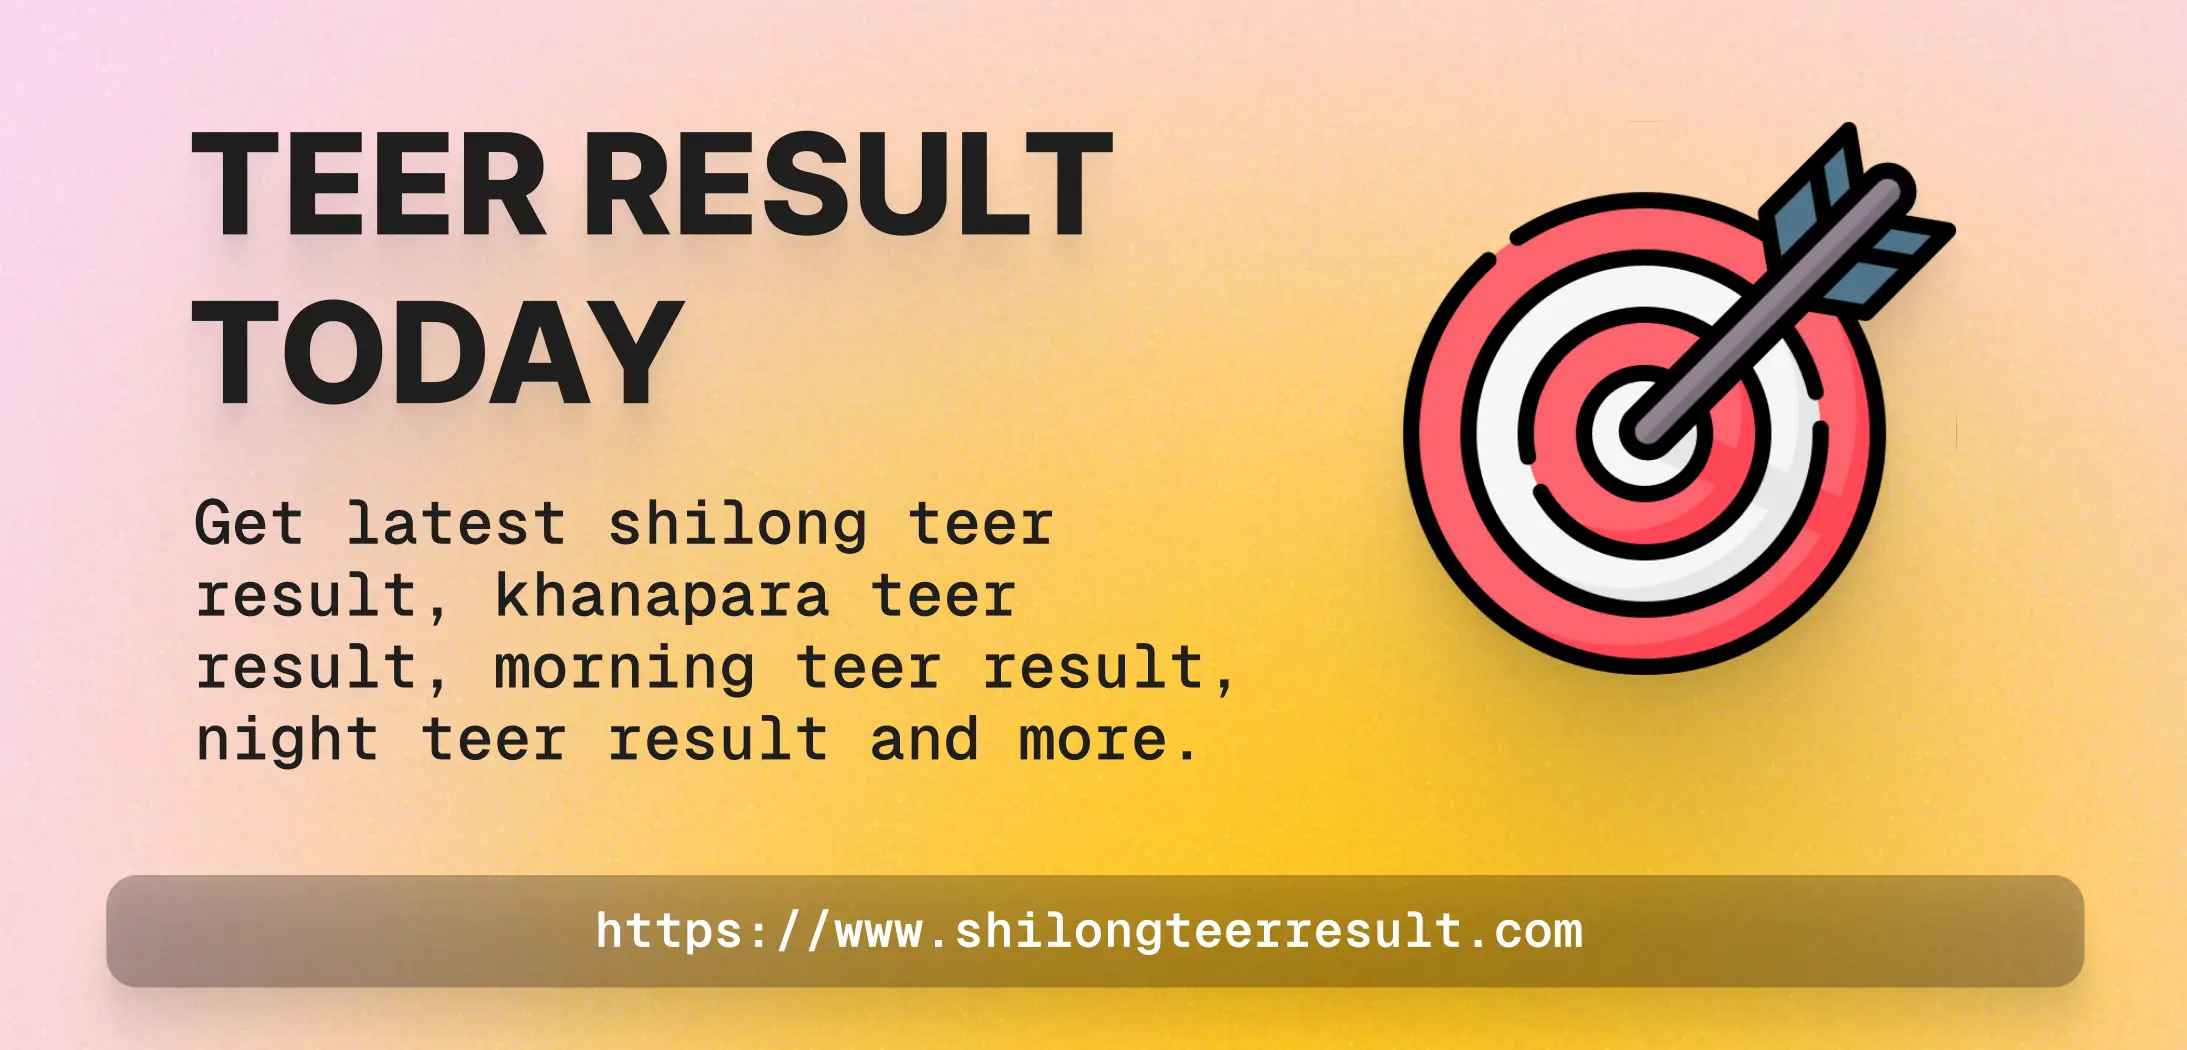 shilong teer result com cover image